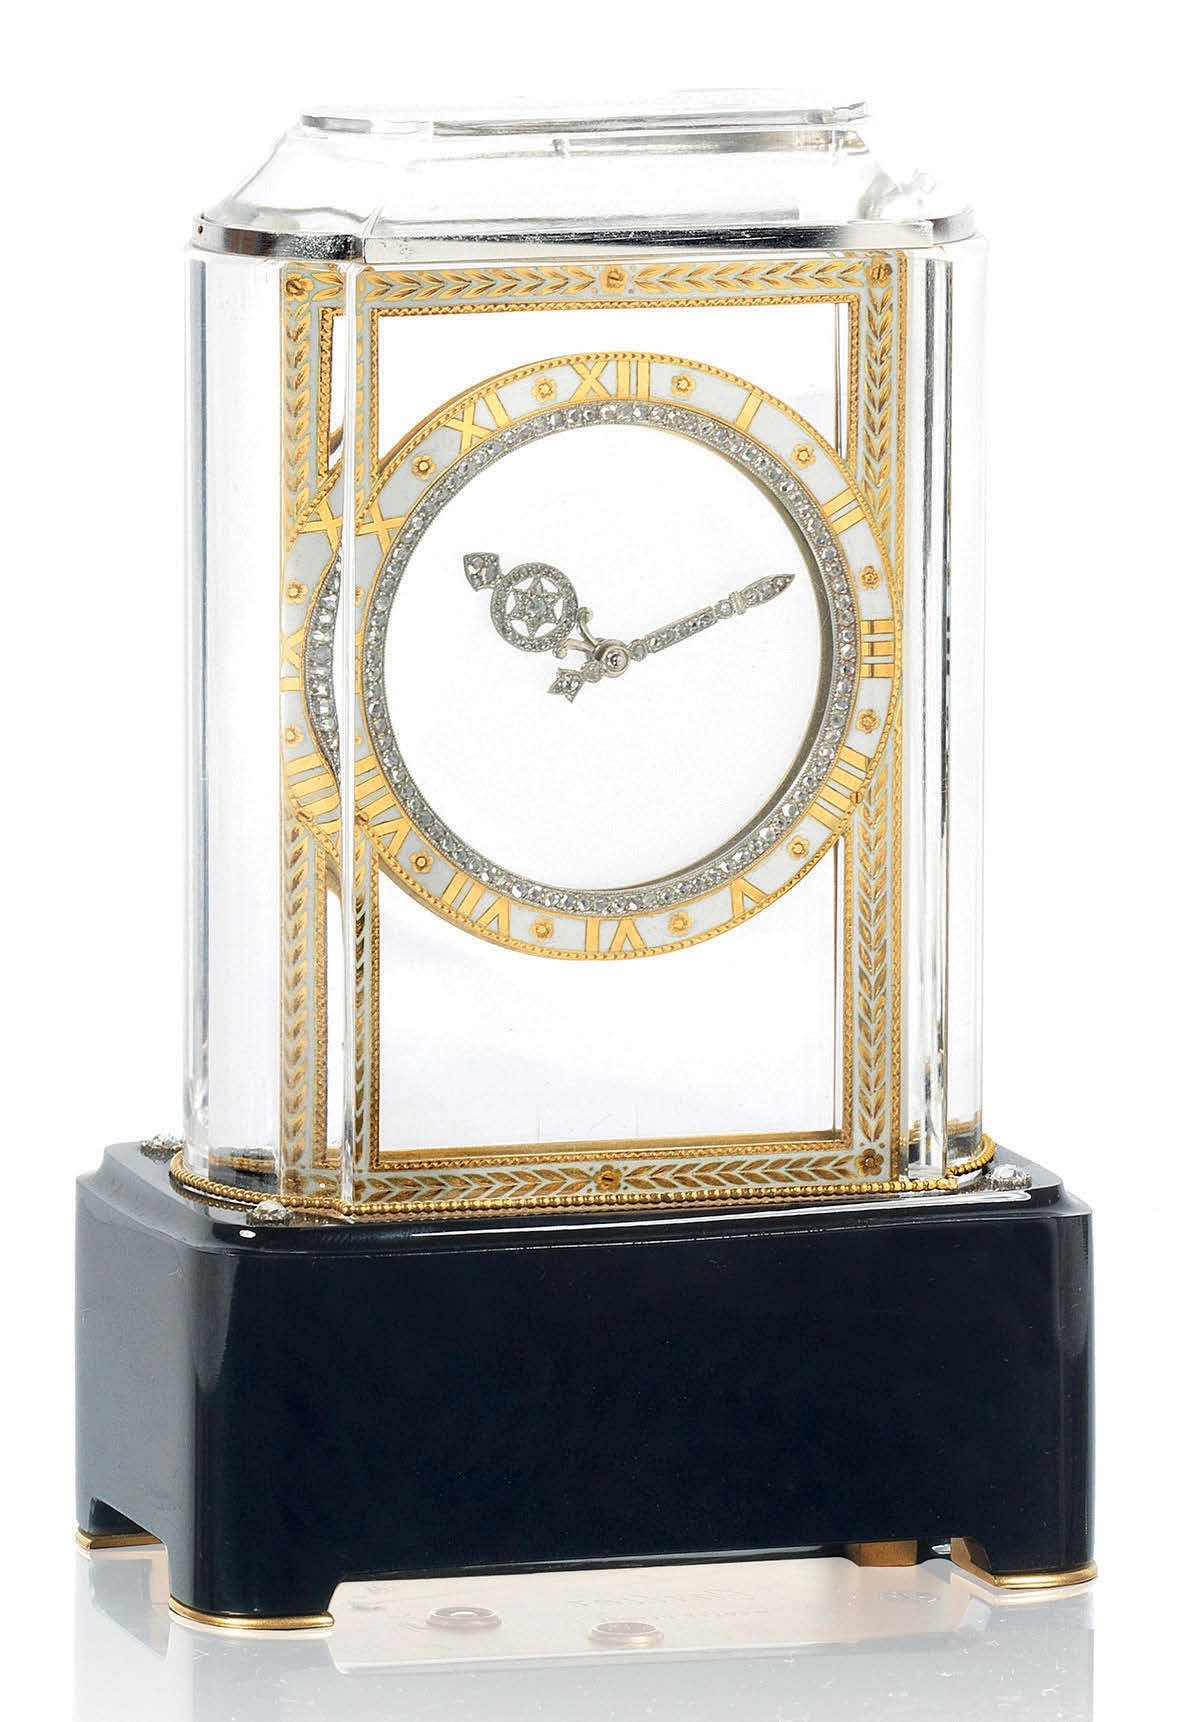 Cartier desk clock collection 